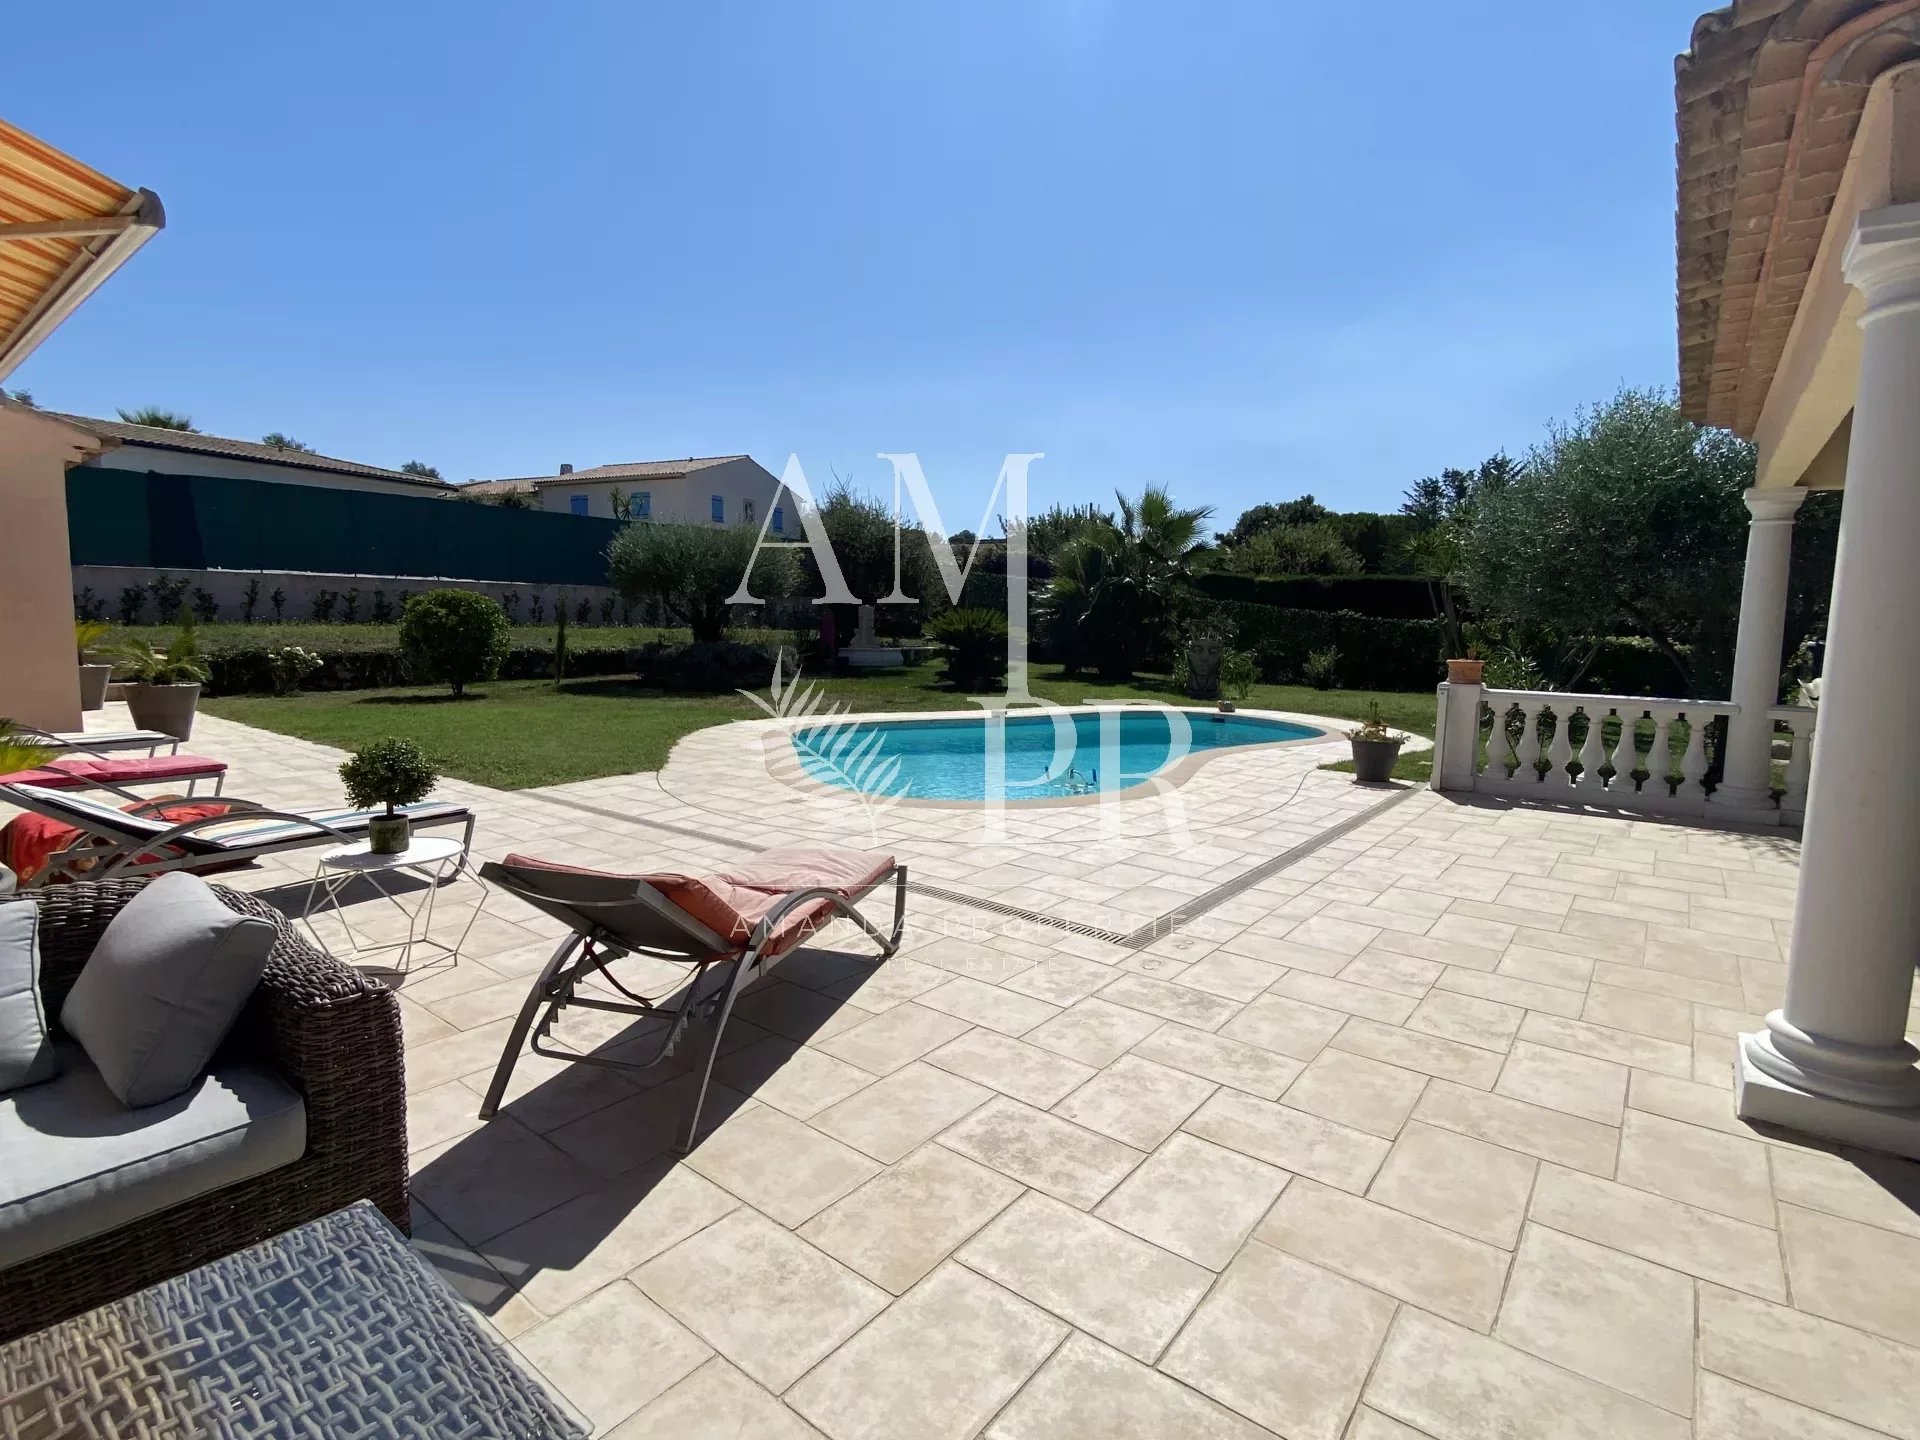 Villa de prestige avec piscine, jardin paysager et vue imprenable